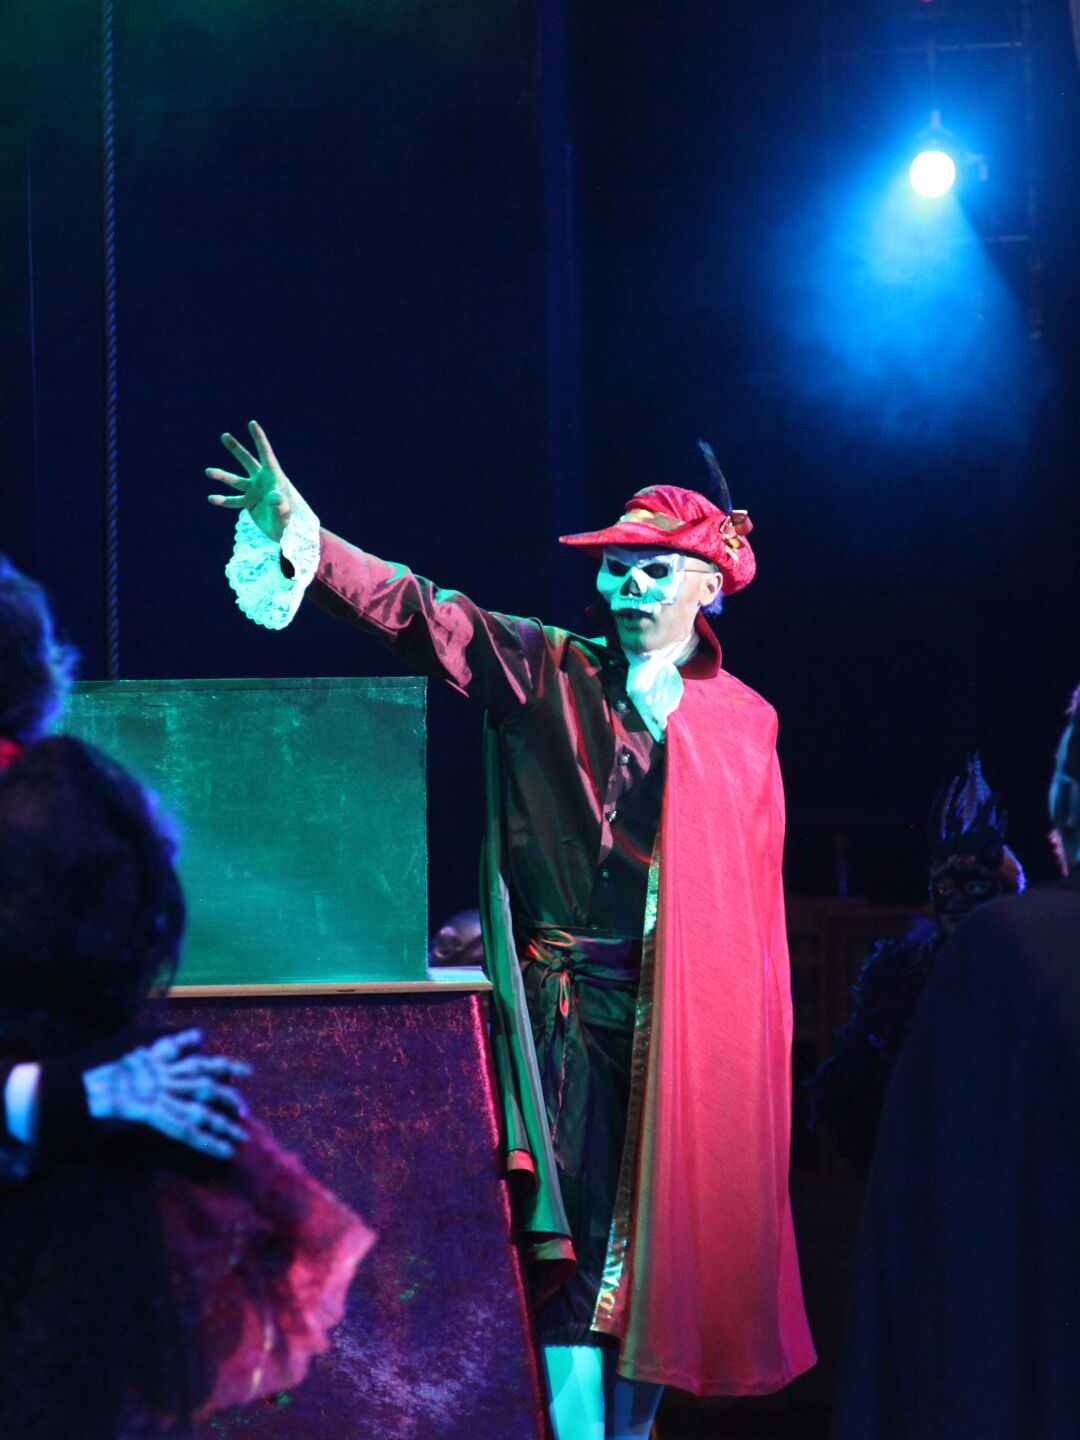 Actor mid scene performance phantom of the opera